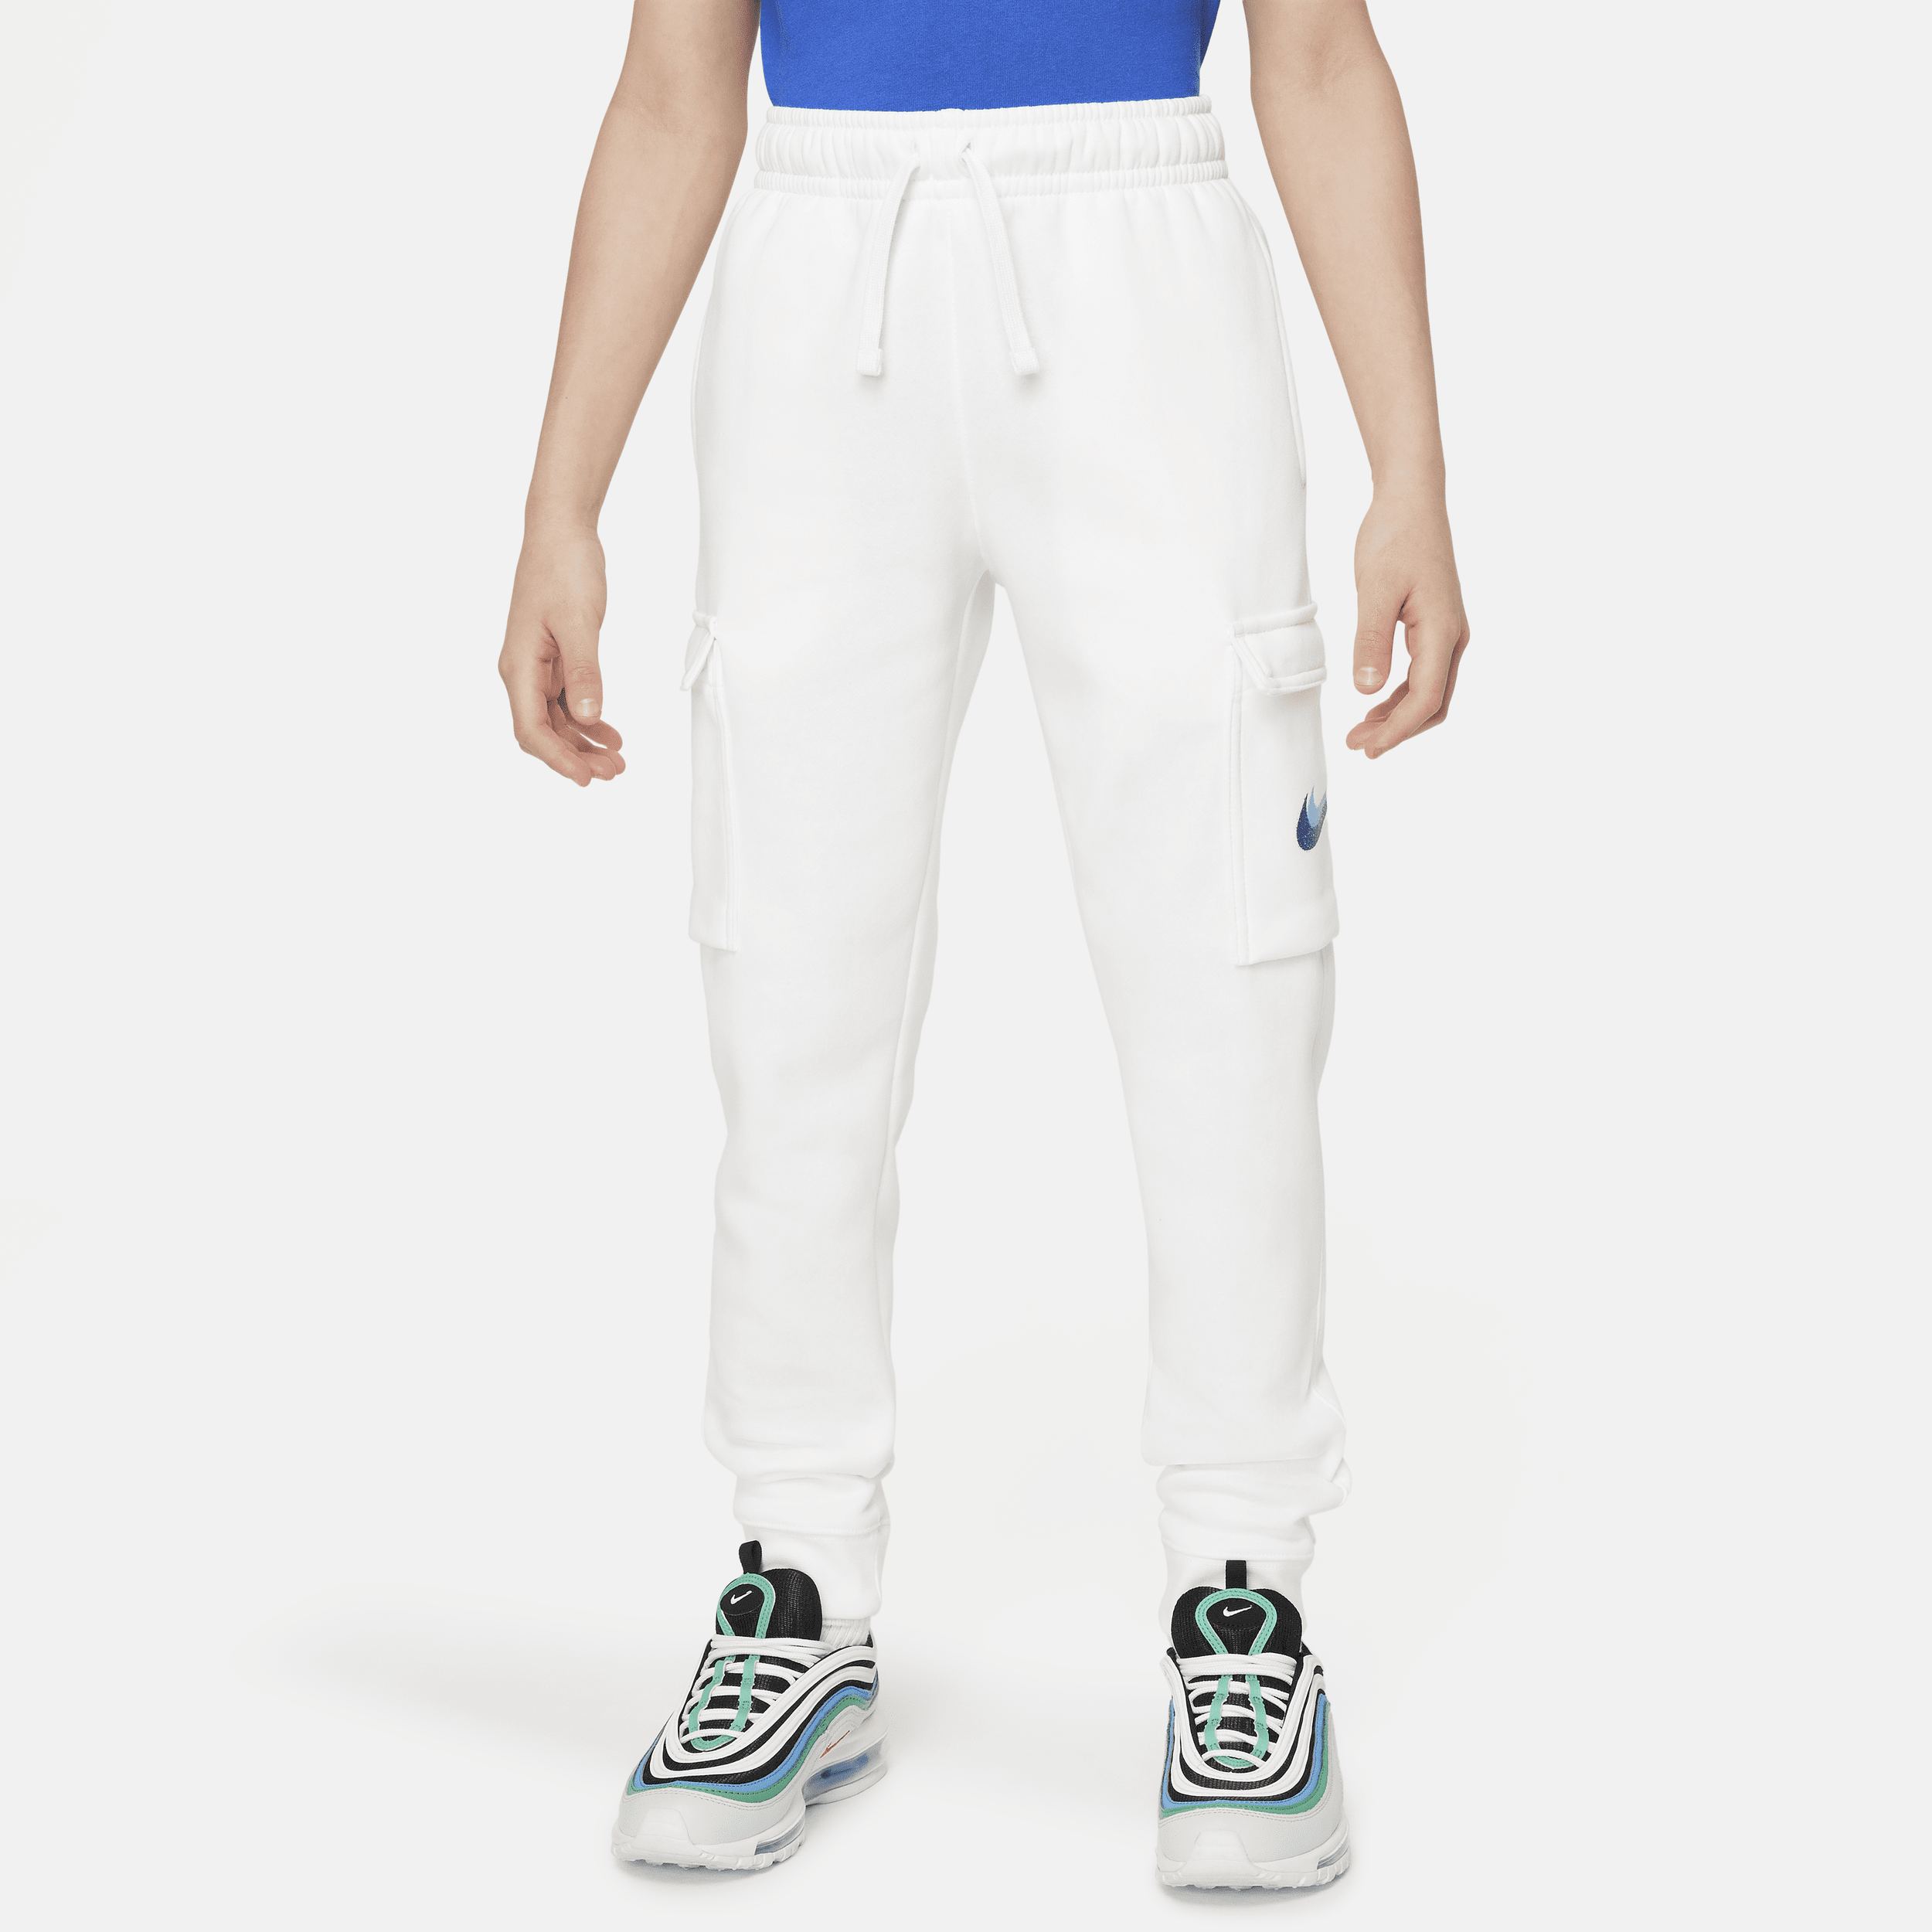 Nike Sportswear-cargobukser i fleece med grafik til større børn (drenge) - hvid